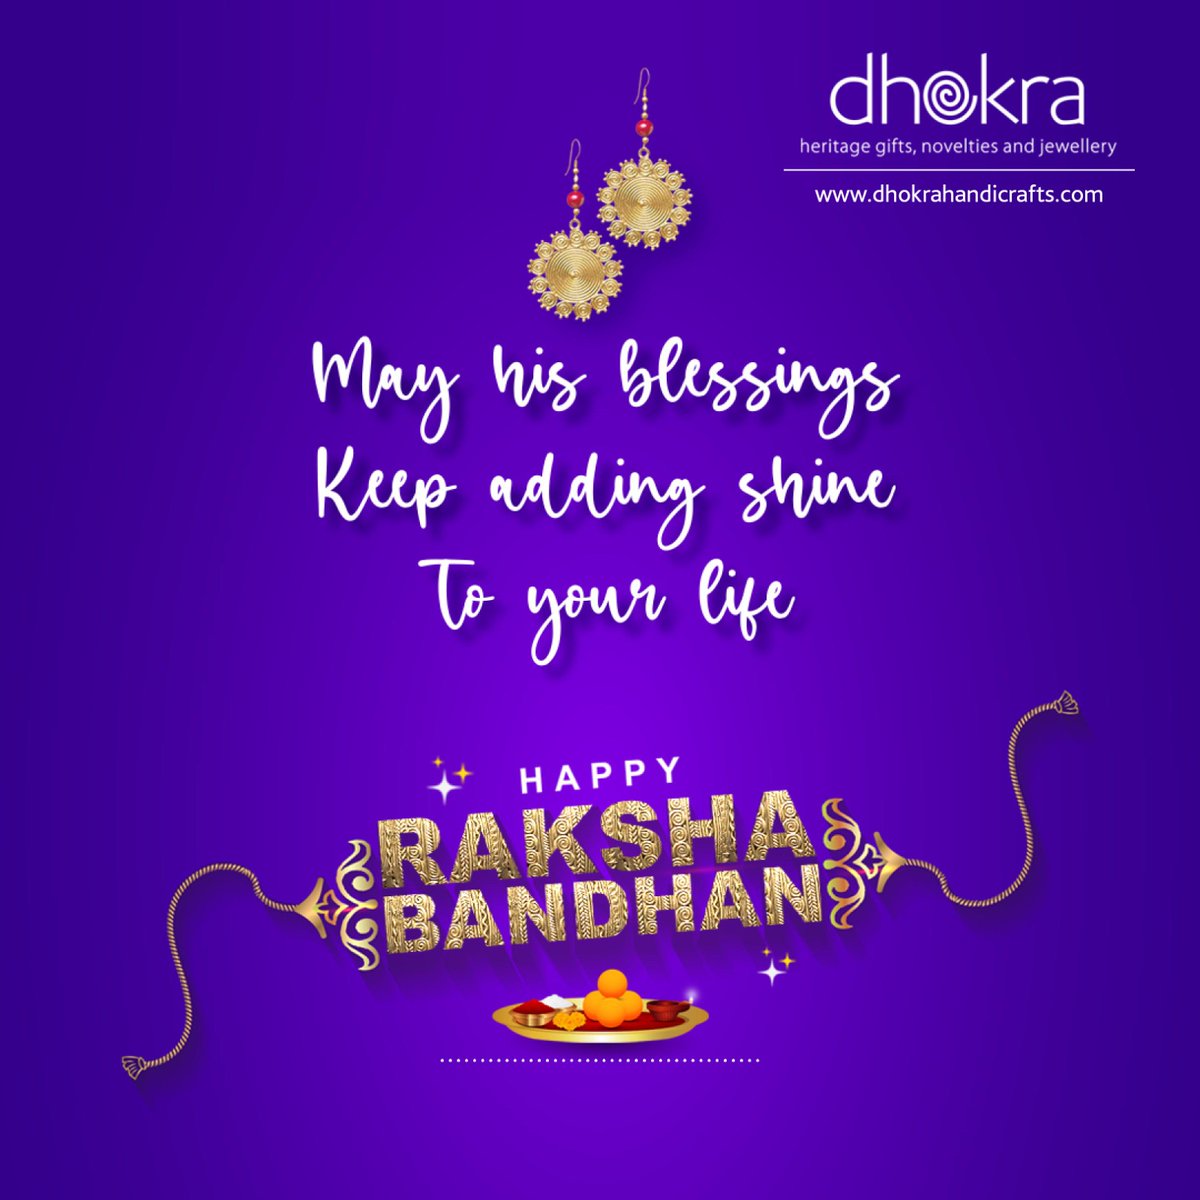 Let's celebrate the Unbreakable bond!

Happy Raksha Bandhan! 

#SiblingLove #RakshaBandhan #SiblingLove #FamilyBonding #RakhiJoy #BrotherSister #ForeverConnected #LoveAndLaughs #MemoriesTogether #CelebratingSiblings #JoyfulMoments #Dhokra #DhokraHandicrafts